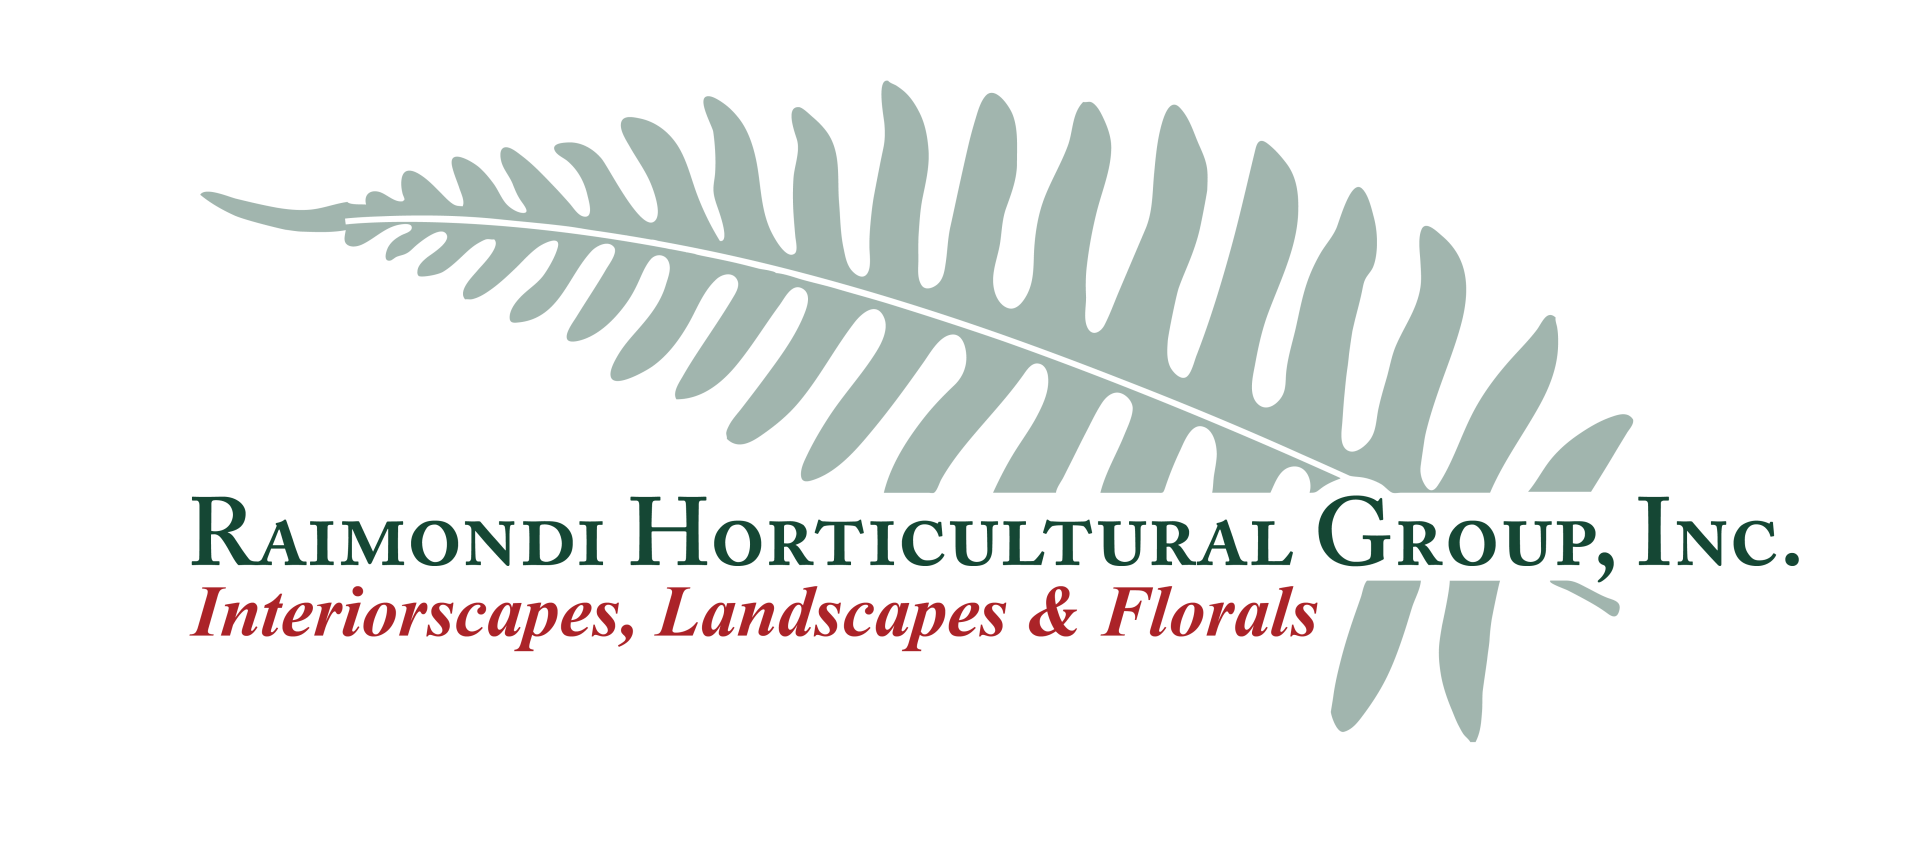 Raimondi Horticultural Group, Inc